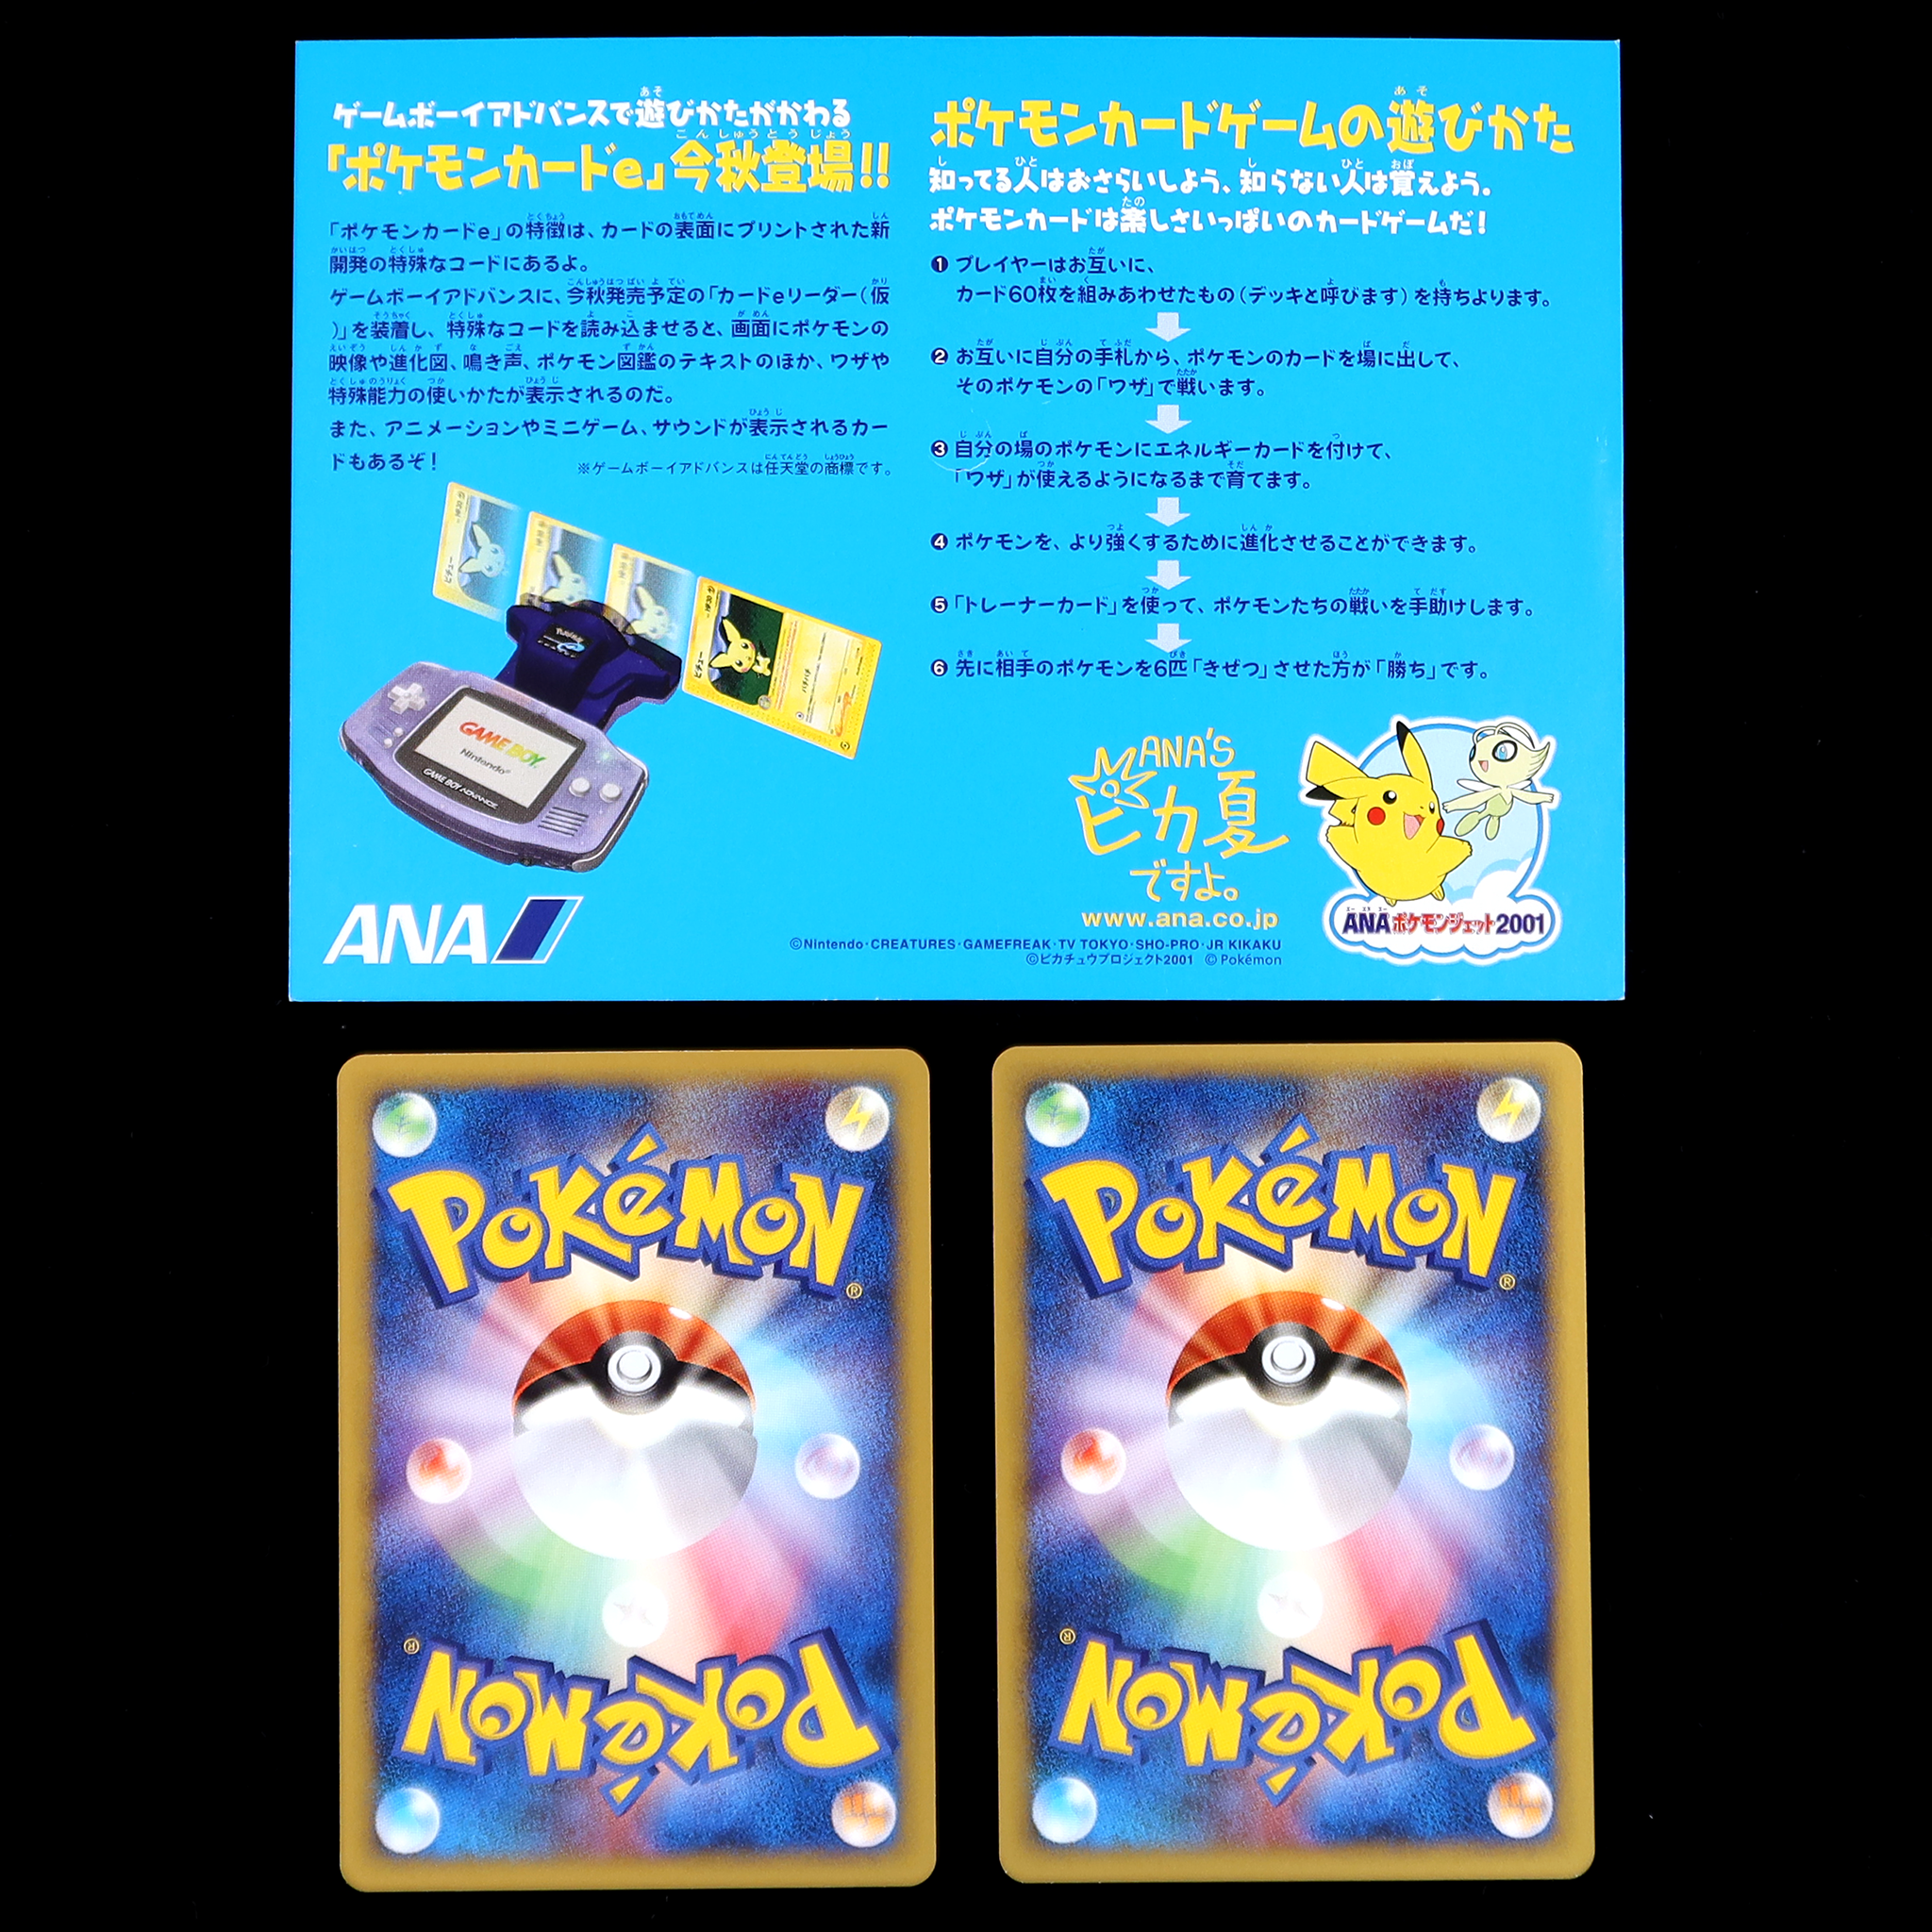 POKEMON CARD GAME POKÉMON CARD e - ANA Special'01 Version